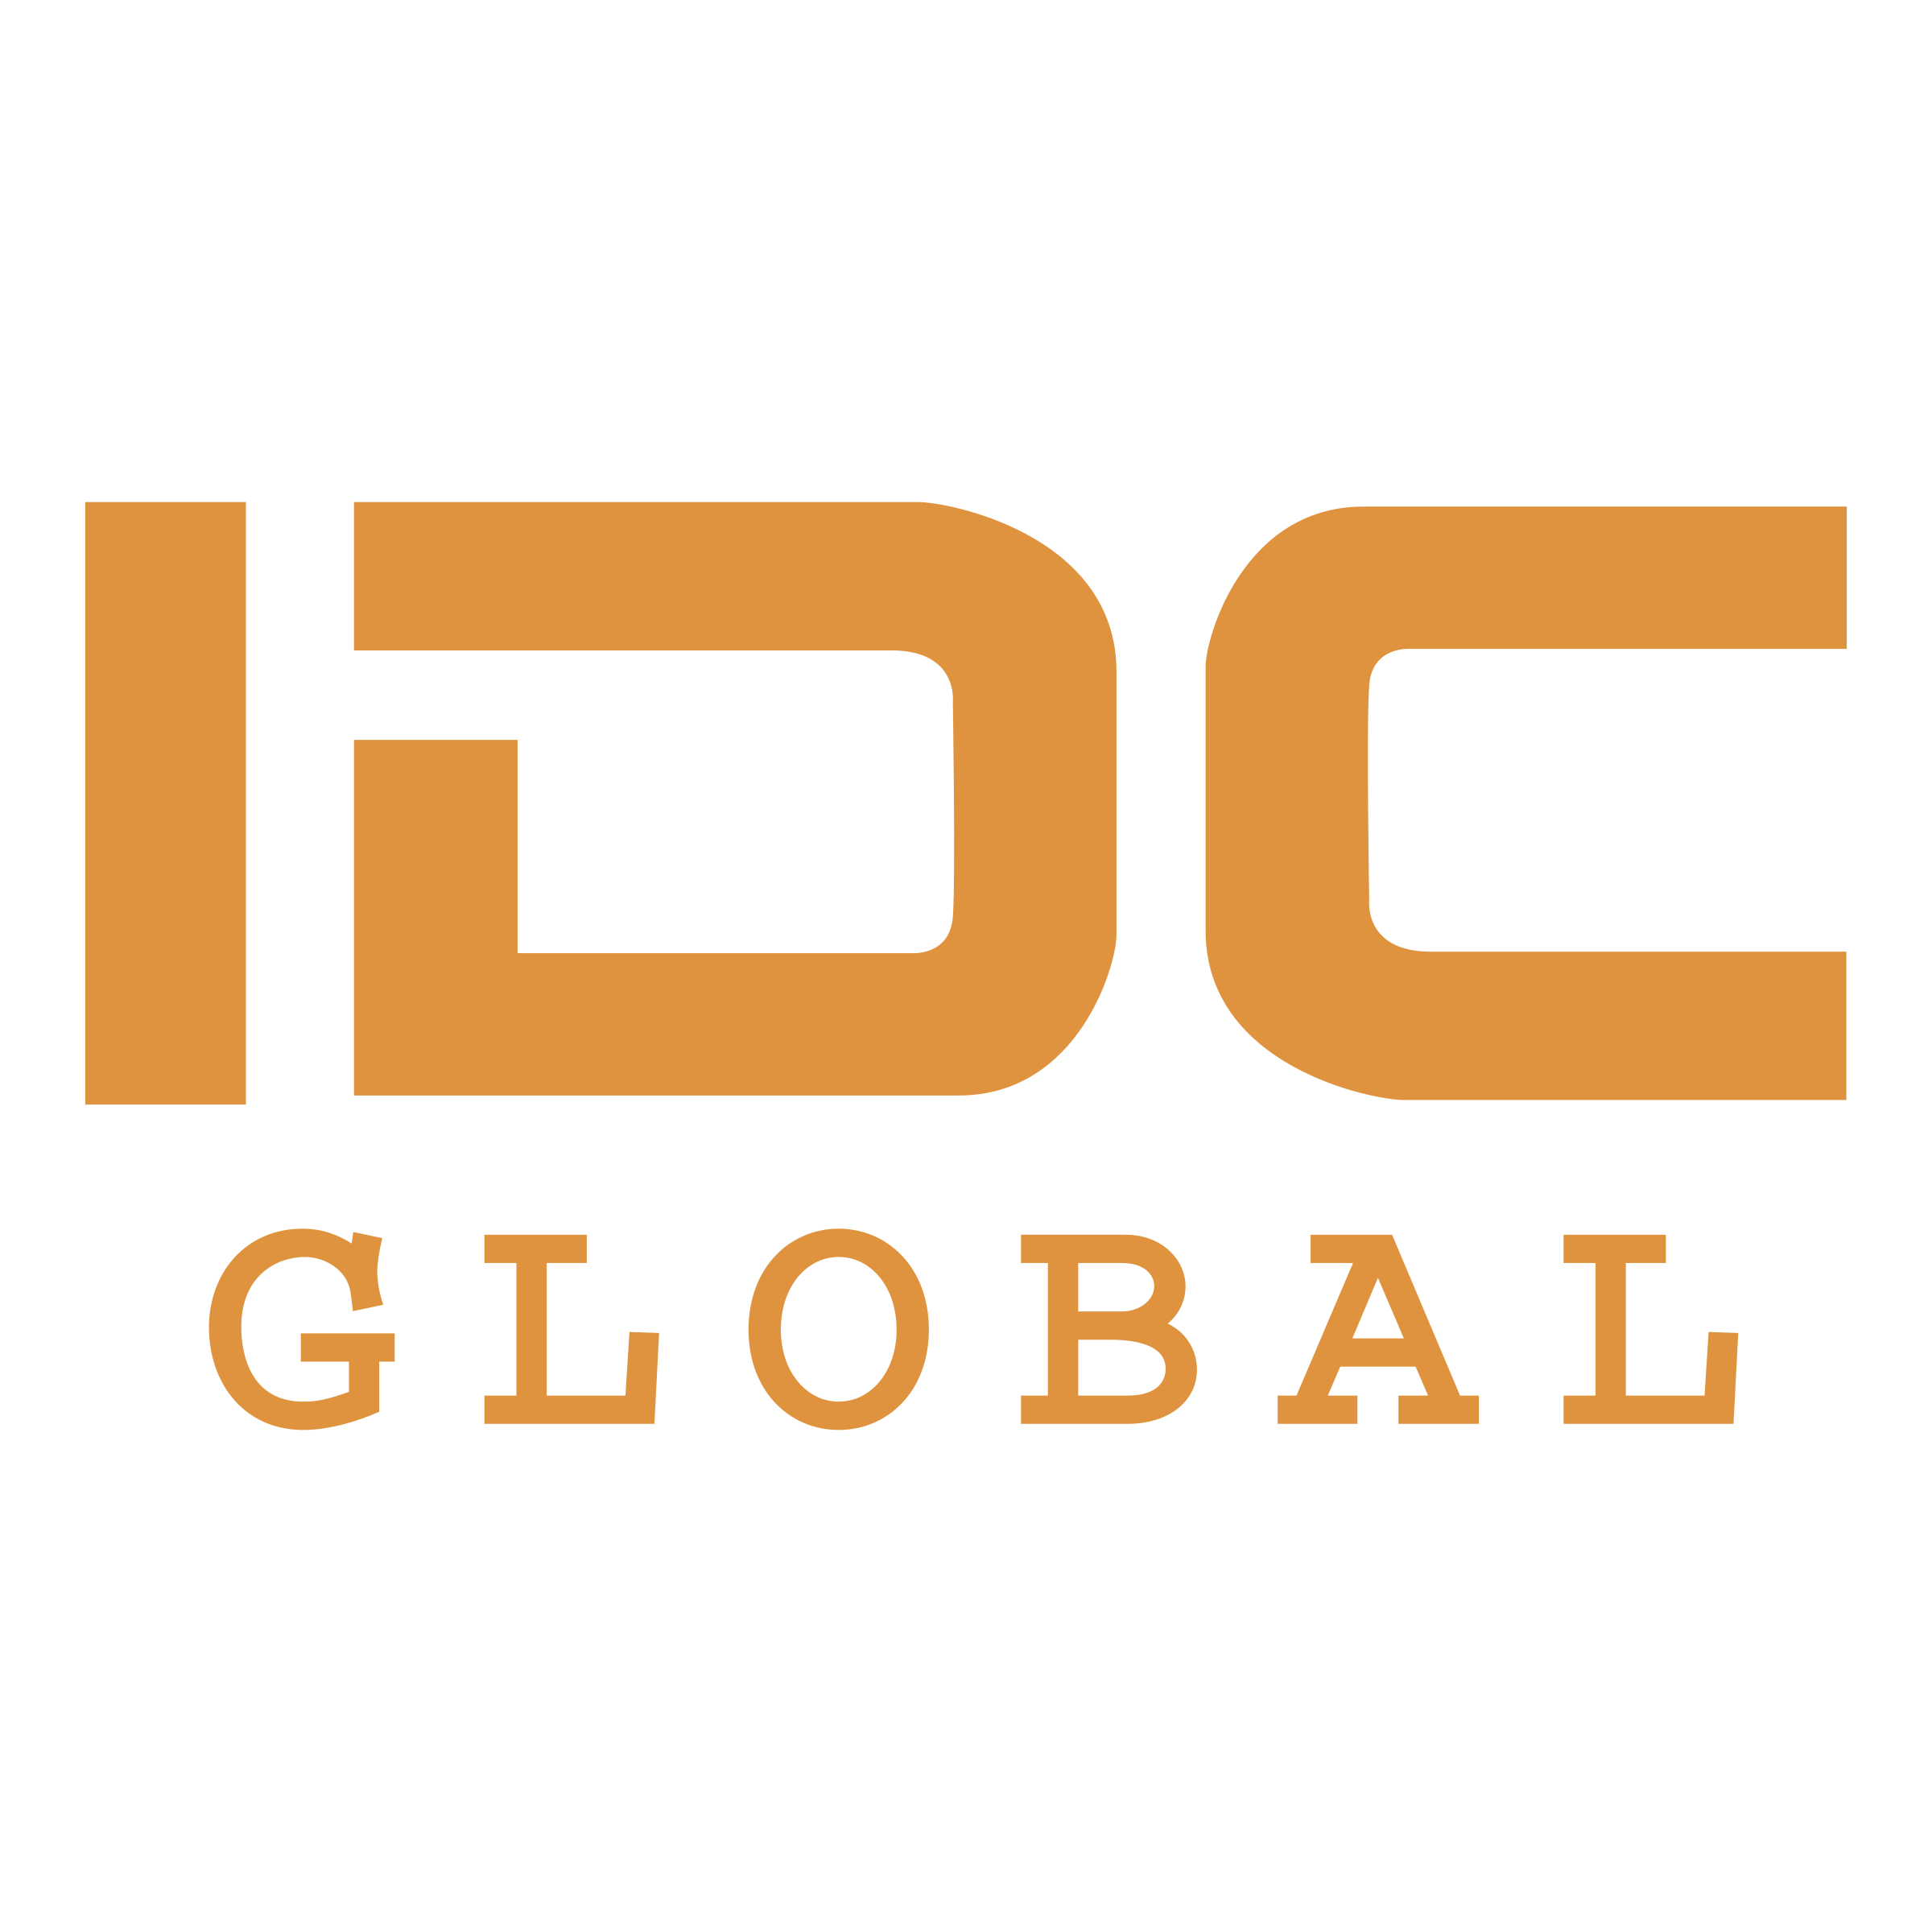 IDC Logo - IDC Global Logo PNG Transparent & SVG Vector - Freebie Supply